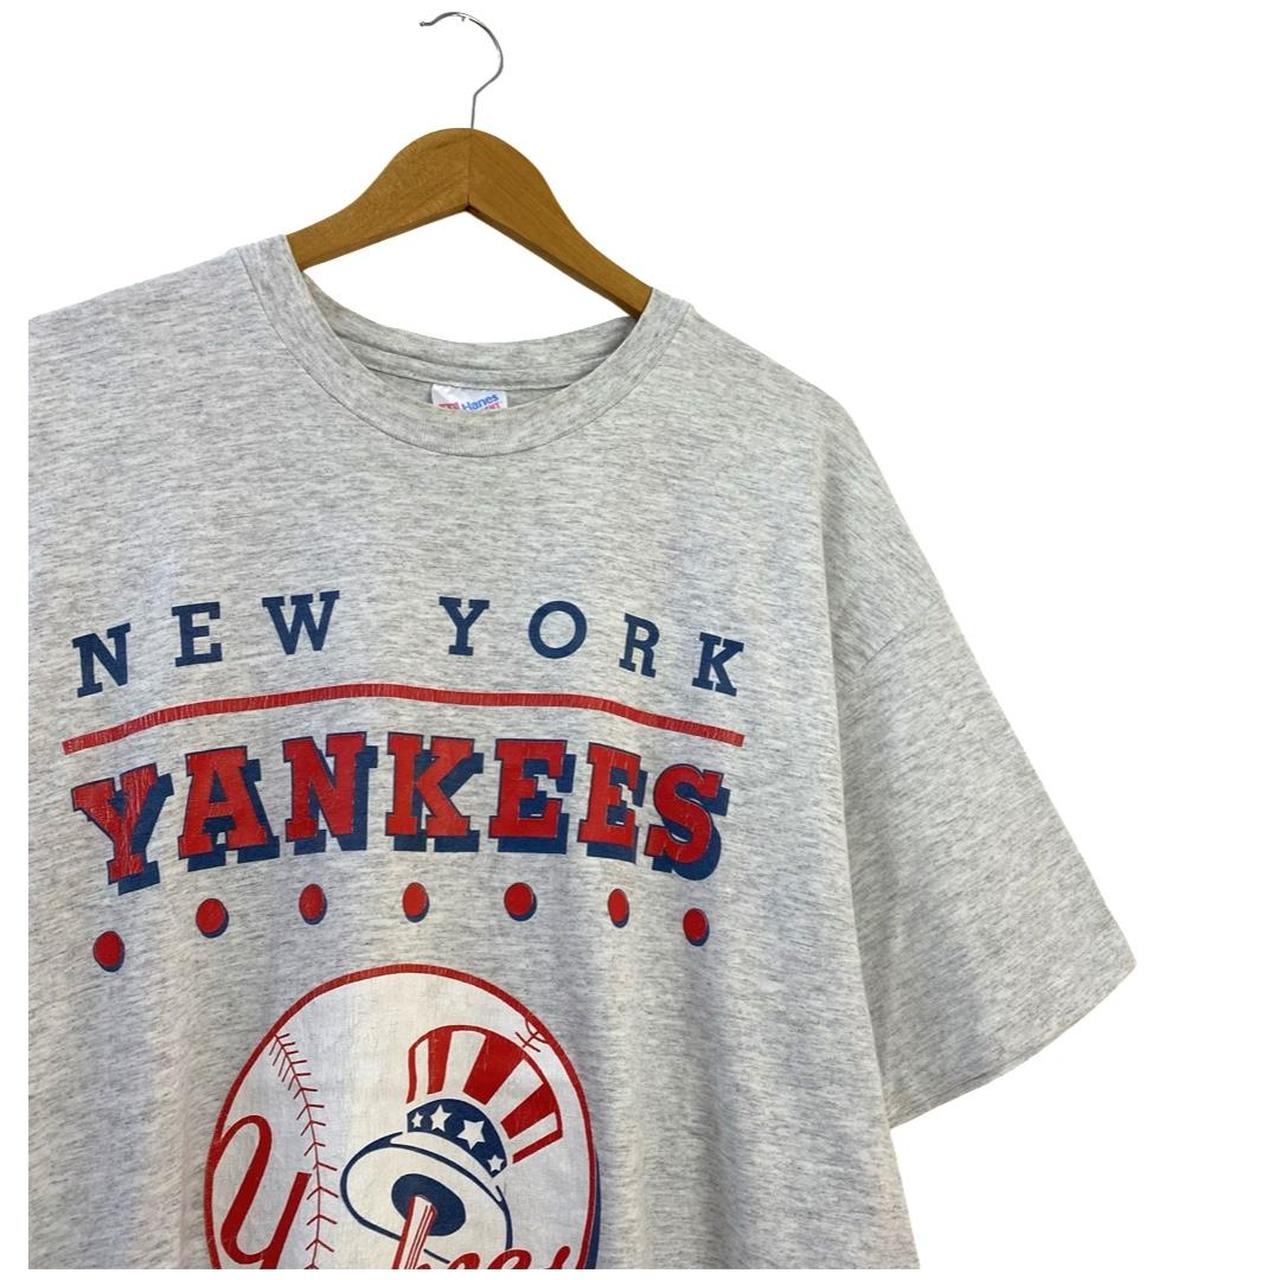 NY YANKEES T-shirt 1989 XXL Vintage/ Original Artex Brand